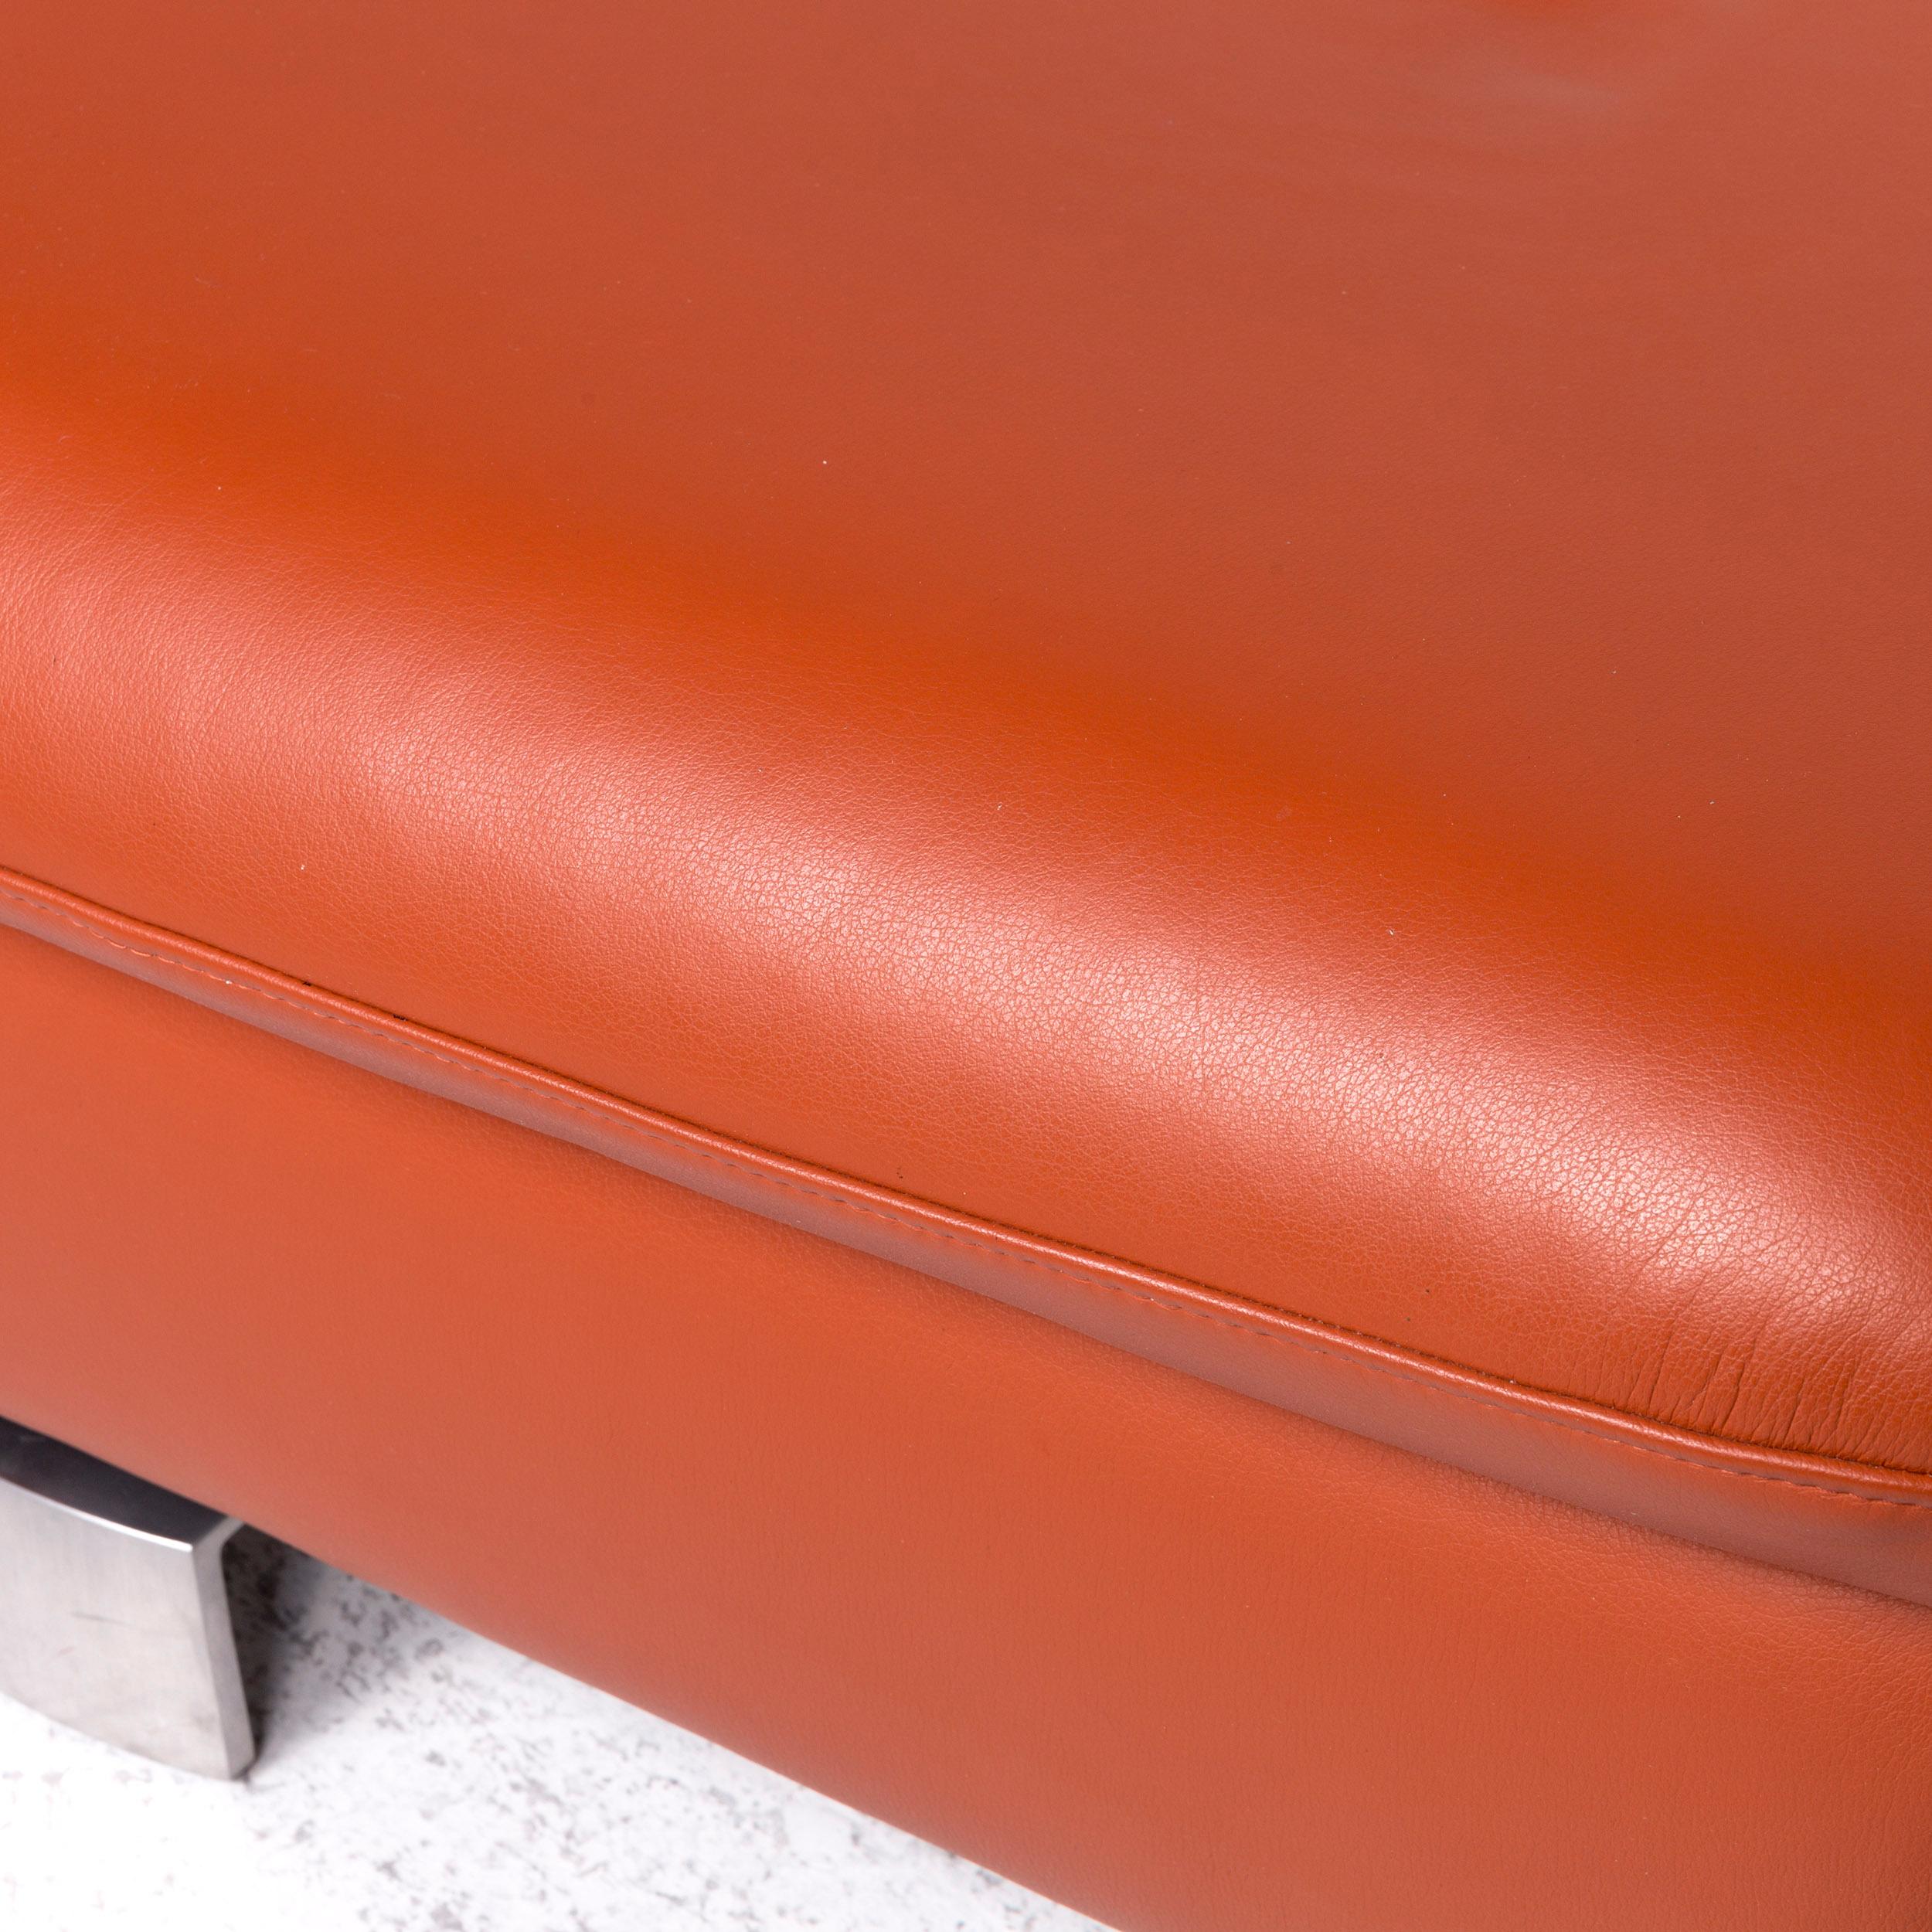 German Ewald Schillig Designer Leather Stool Orange Function Storage Space